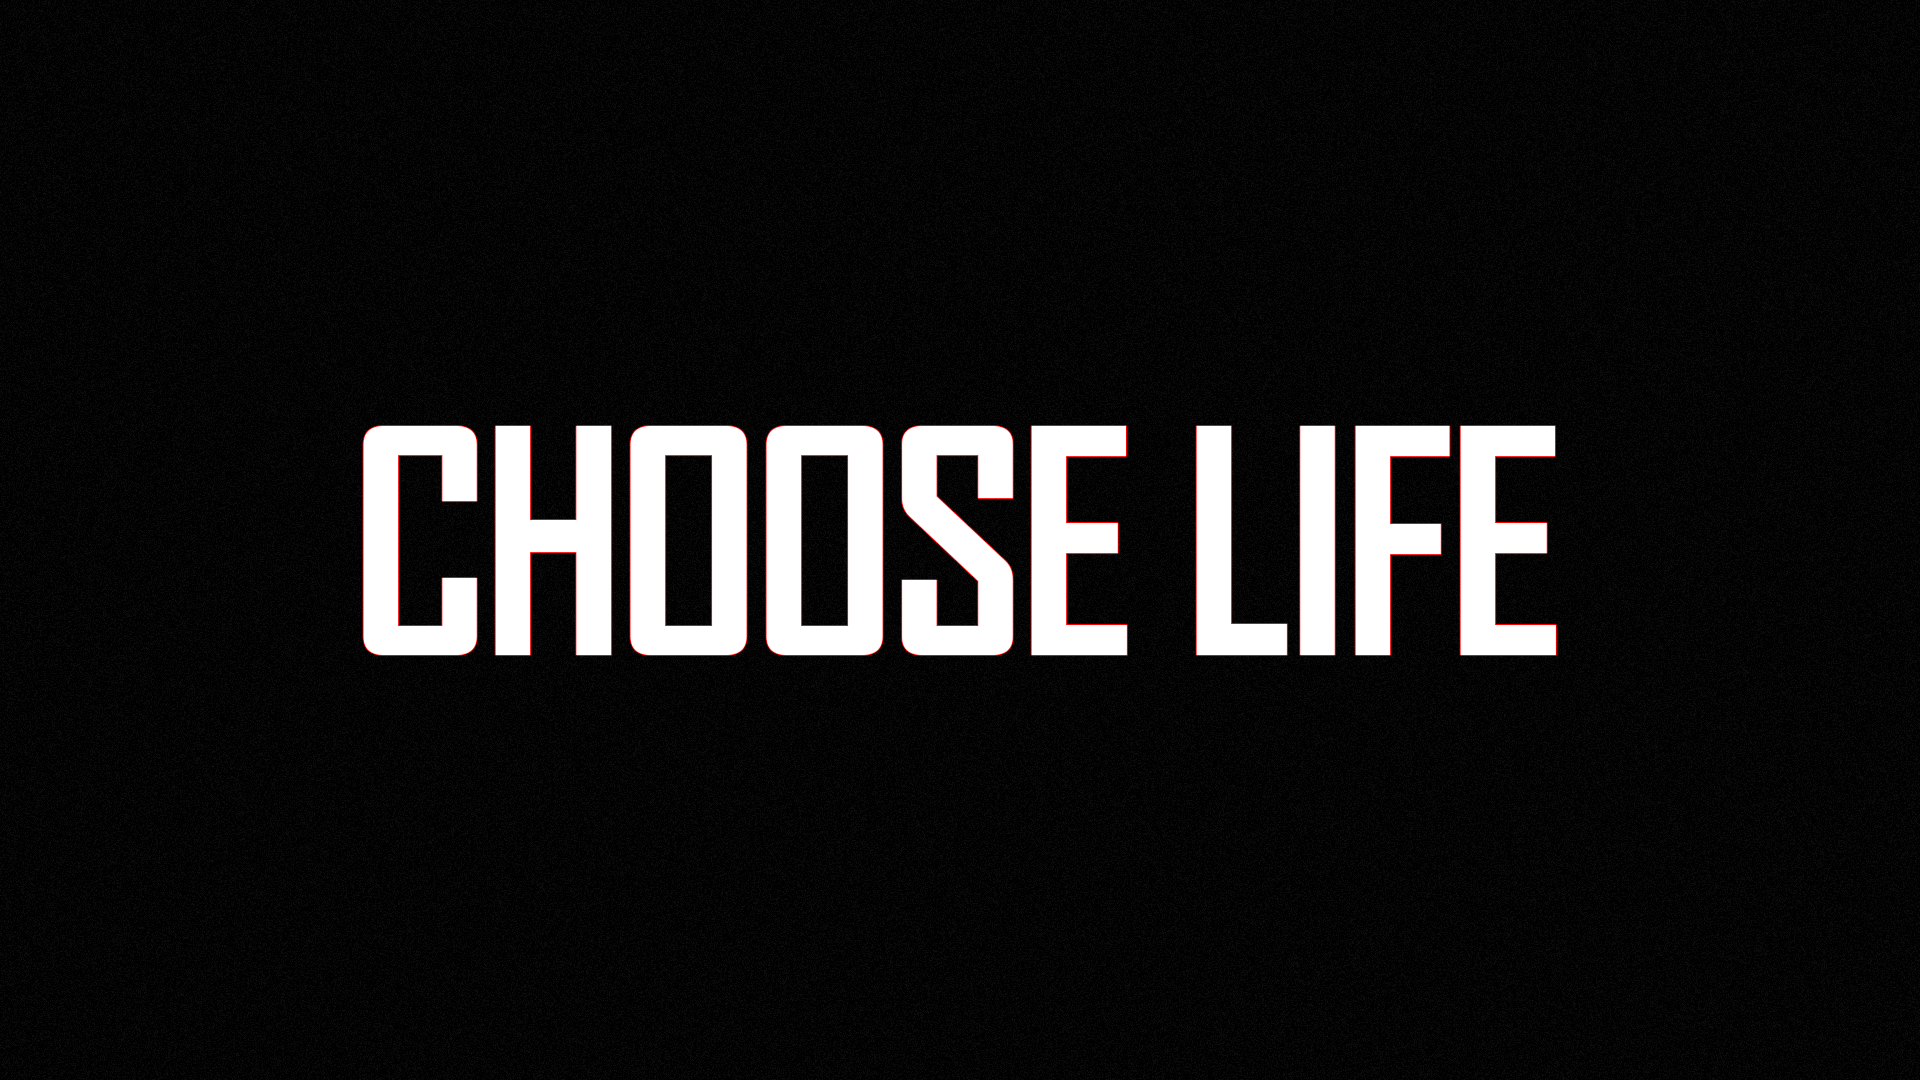 Life is a lie. Life. Choose Life. Choose Future choose Life. Choose your Life.